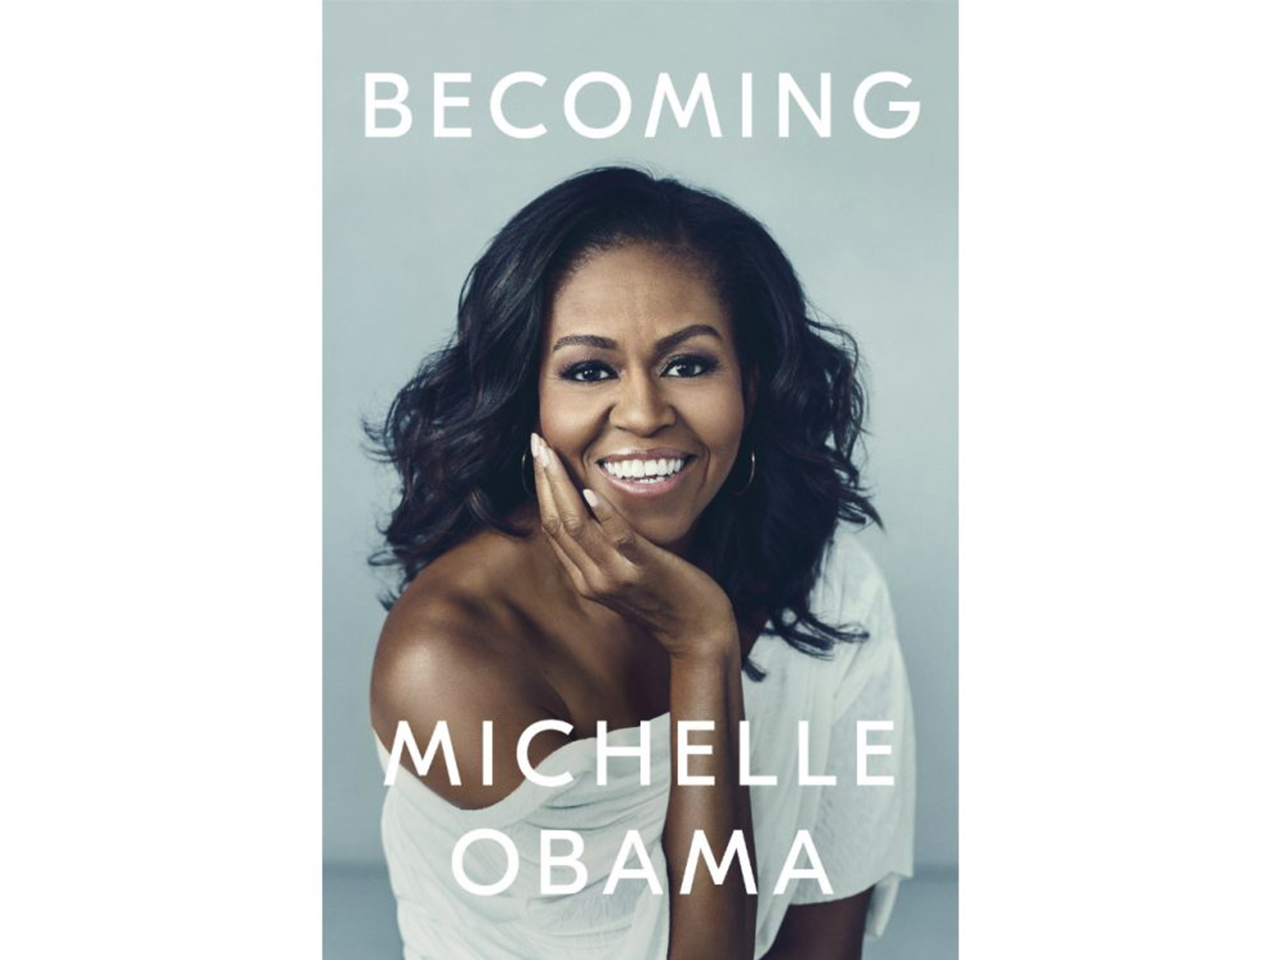 Michelle Obama’s 2018 memoir, Becoming